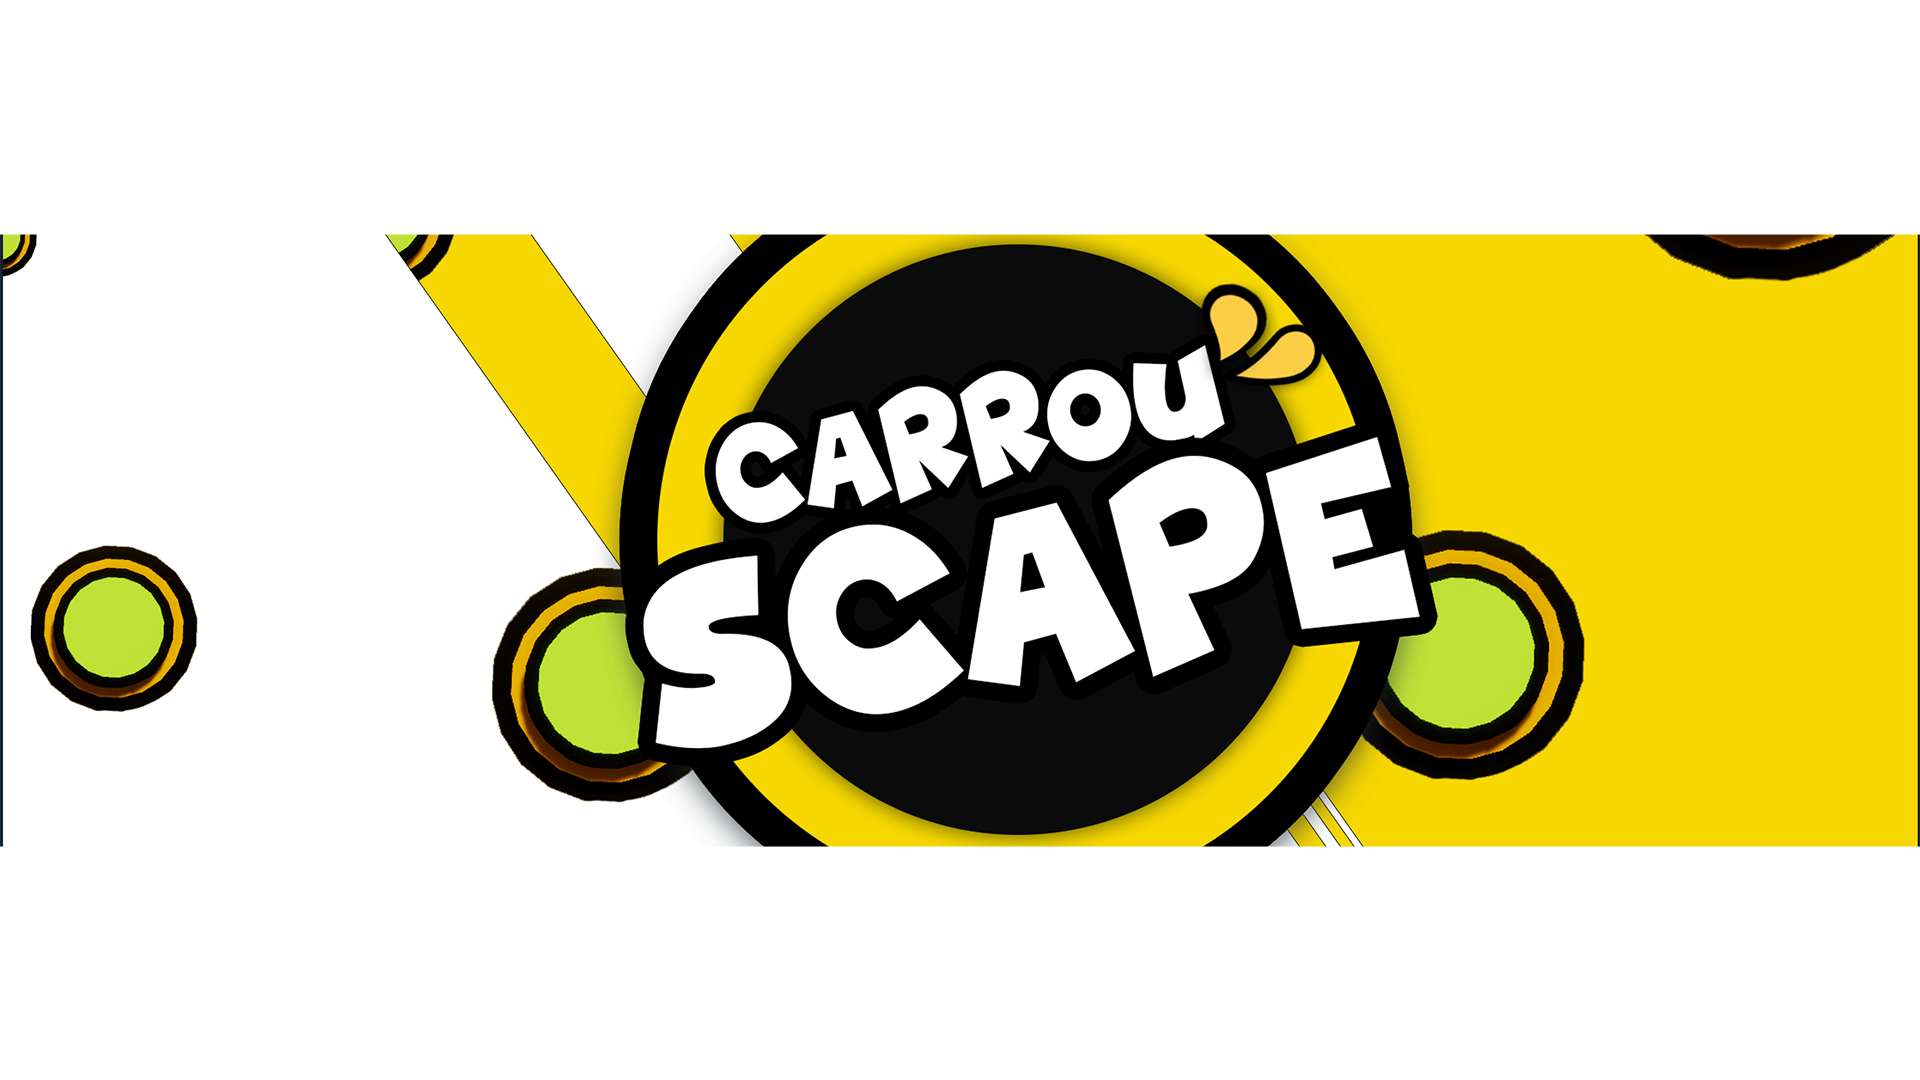 Carrou'scape